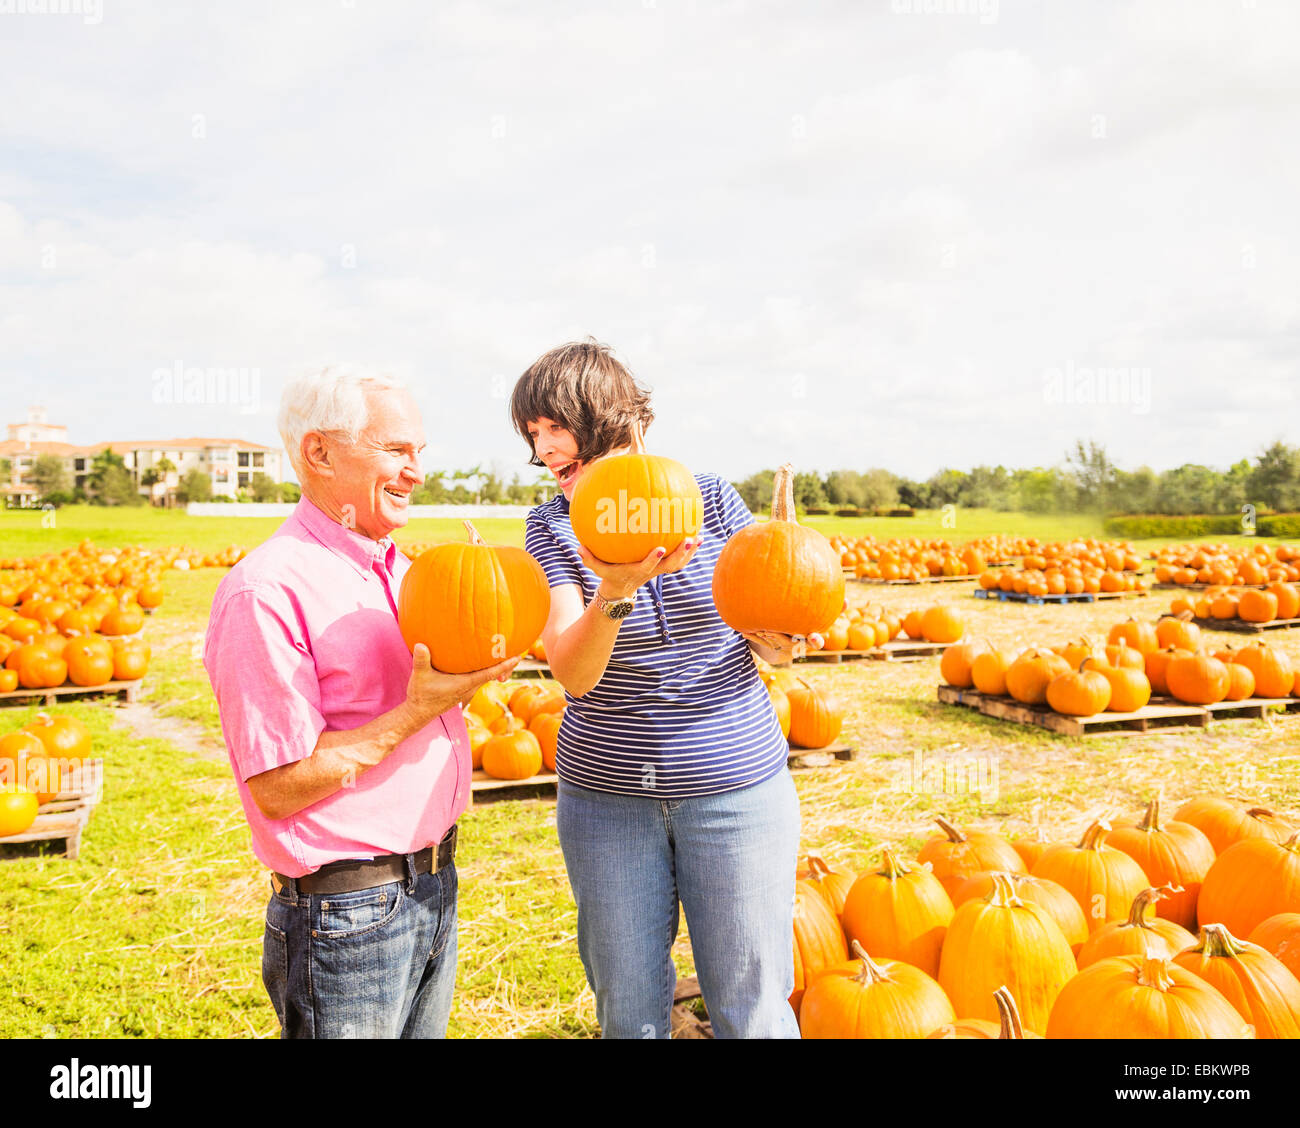 USA, Florida, Jupiter, Couple talking and holding pumpkins Stock Photo